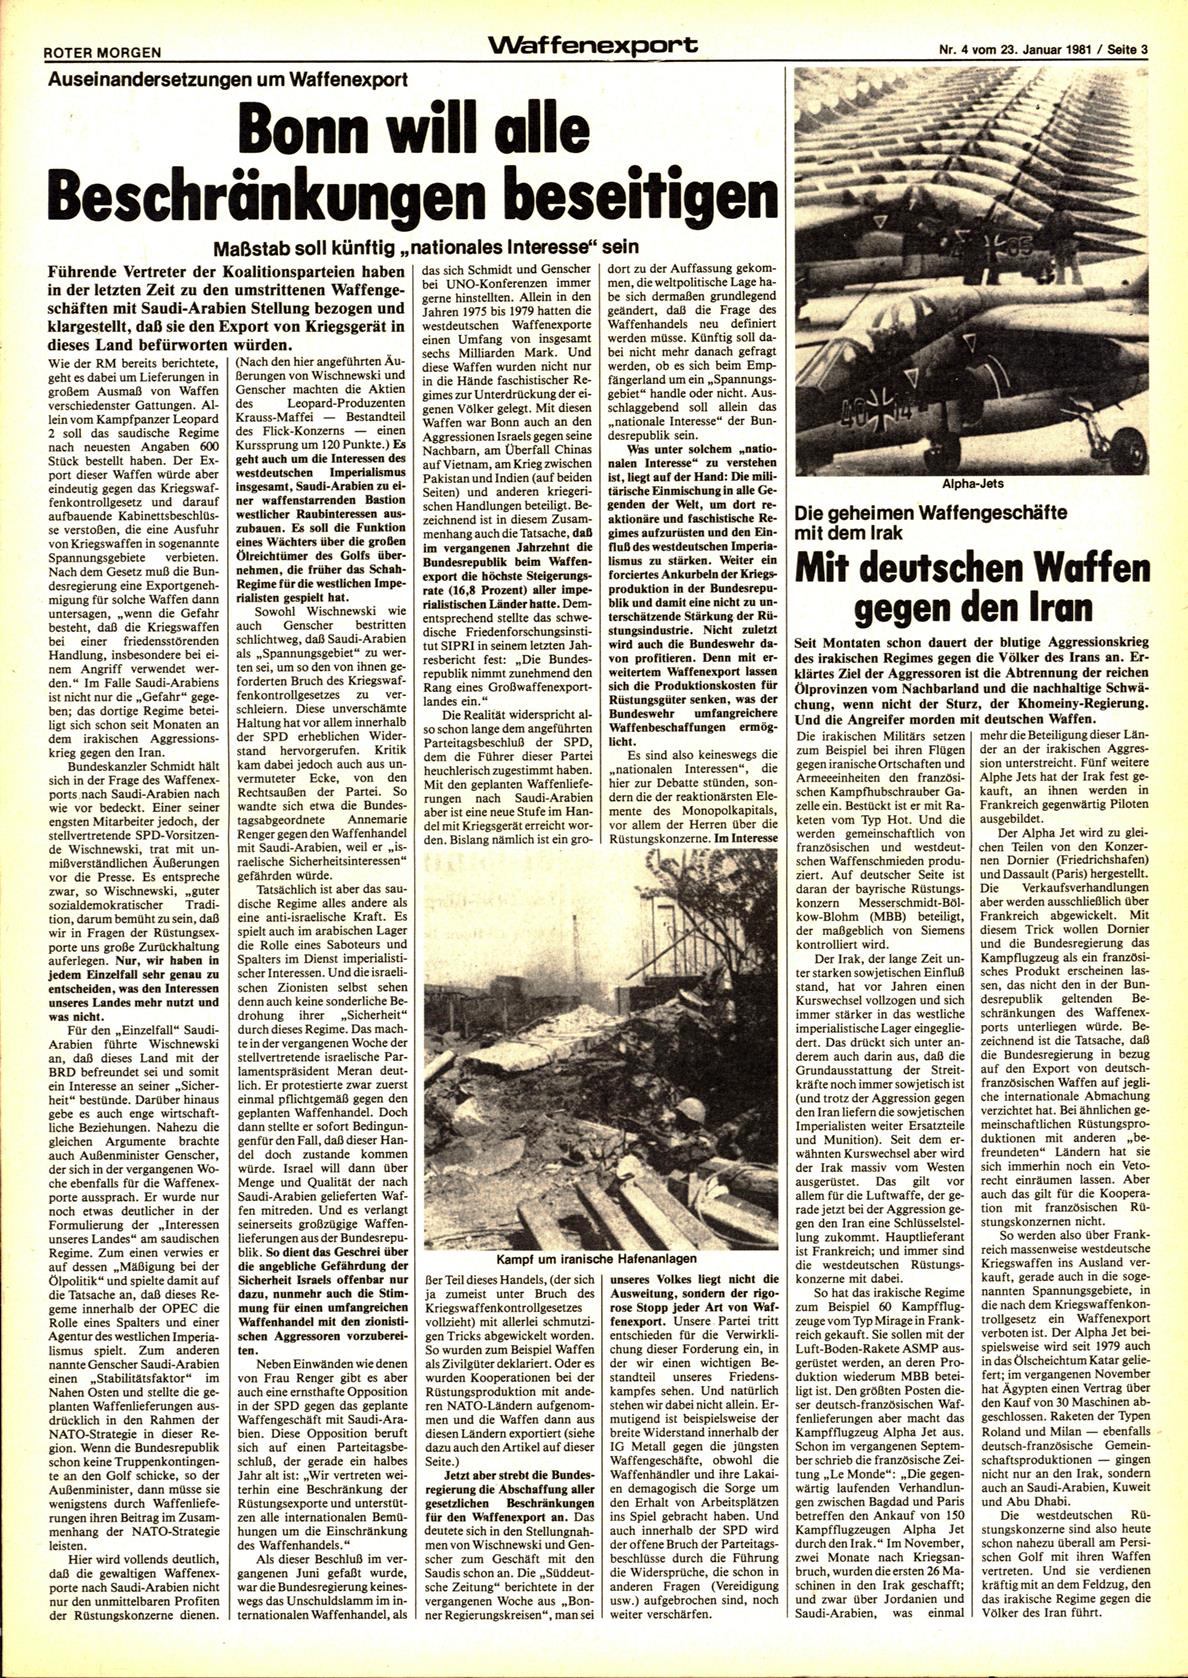 Roter Morgen, 15. Jg., 23. Januar 1981, Nr. 4, Seite 3